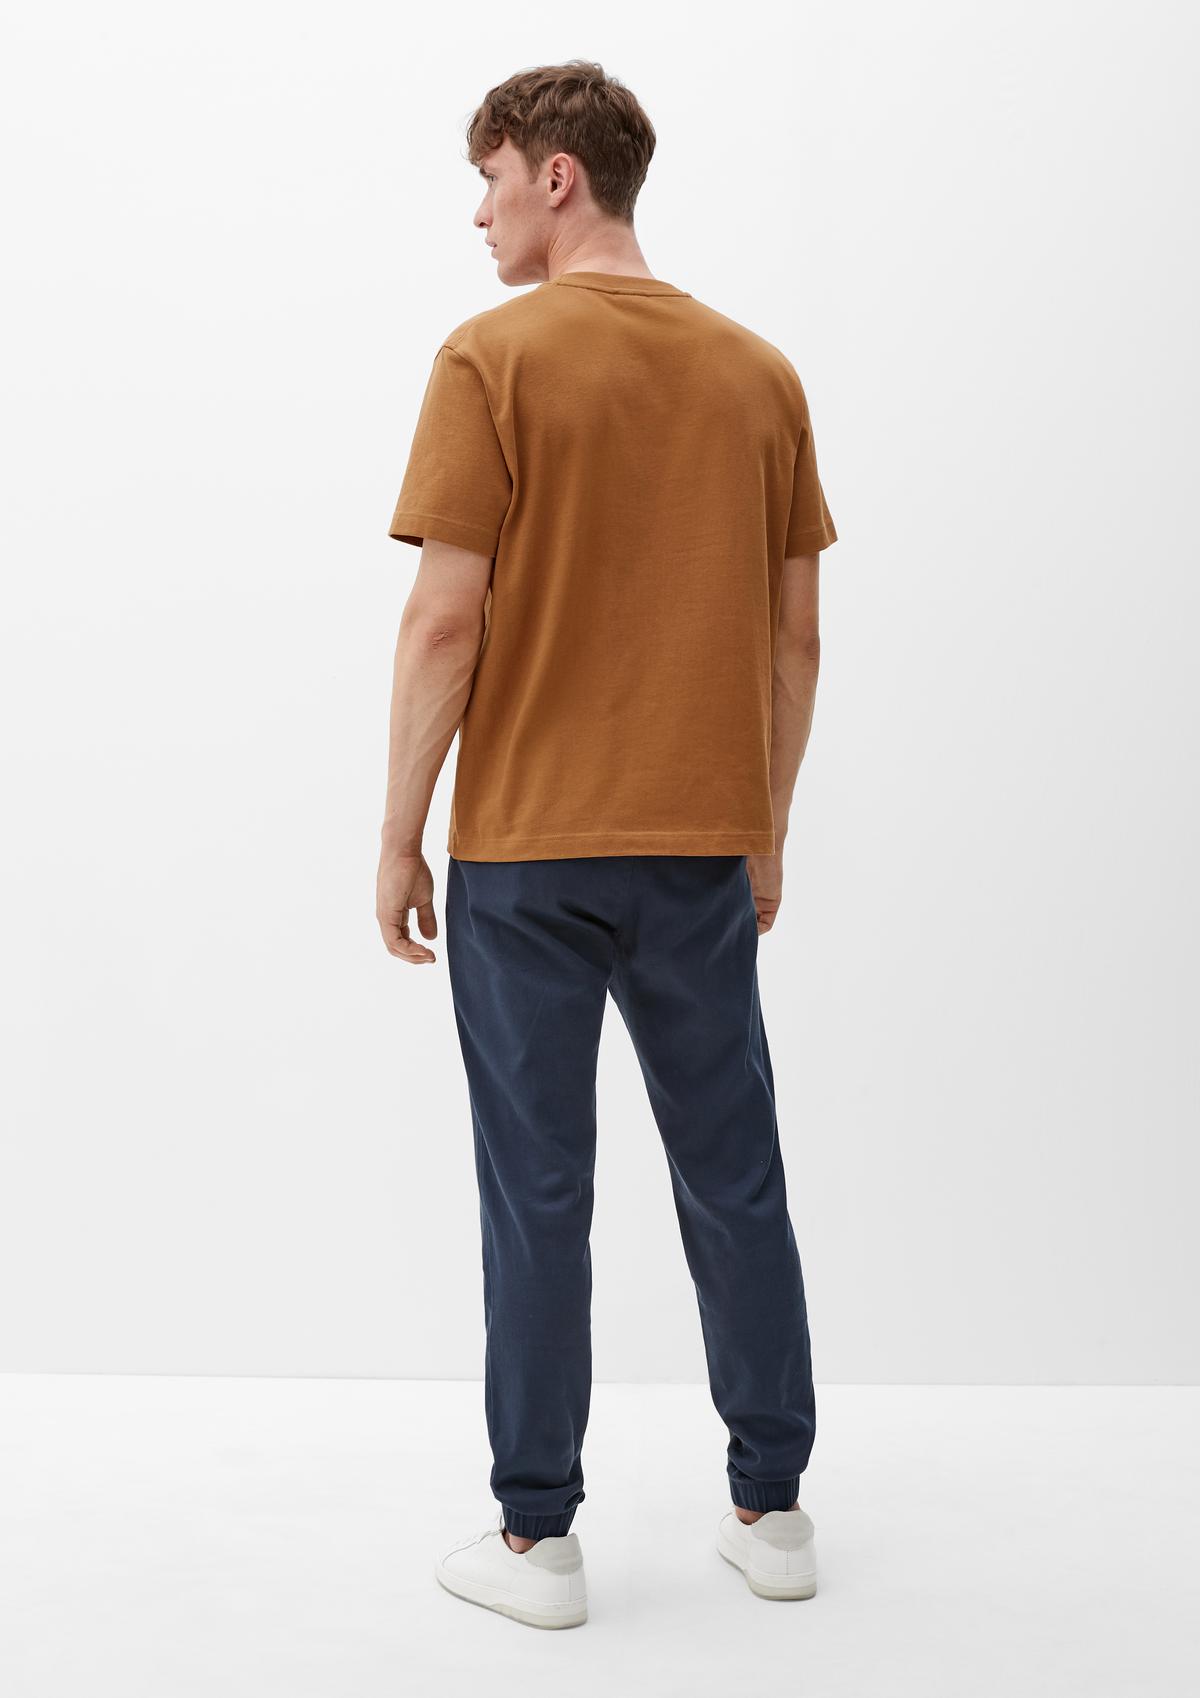 s.Oliver T-Shirt im Oversize-Look